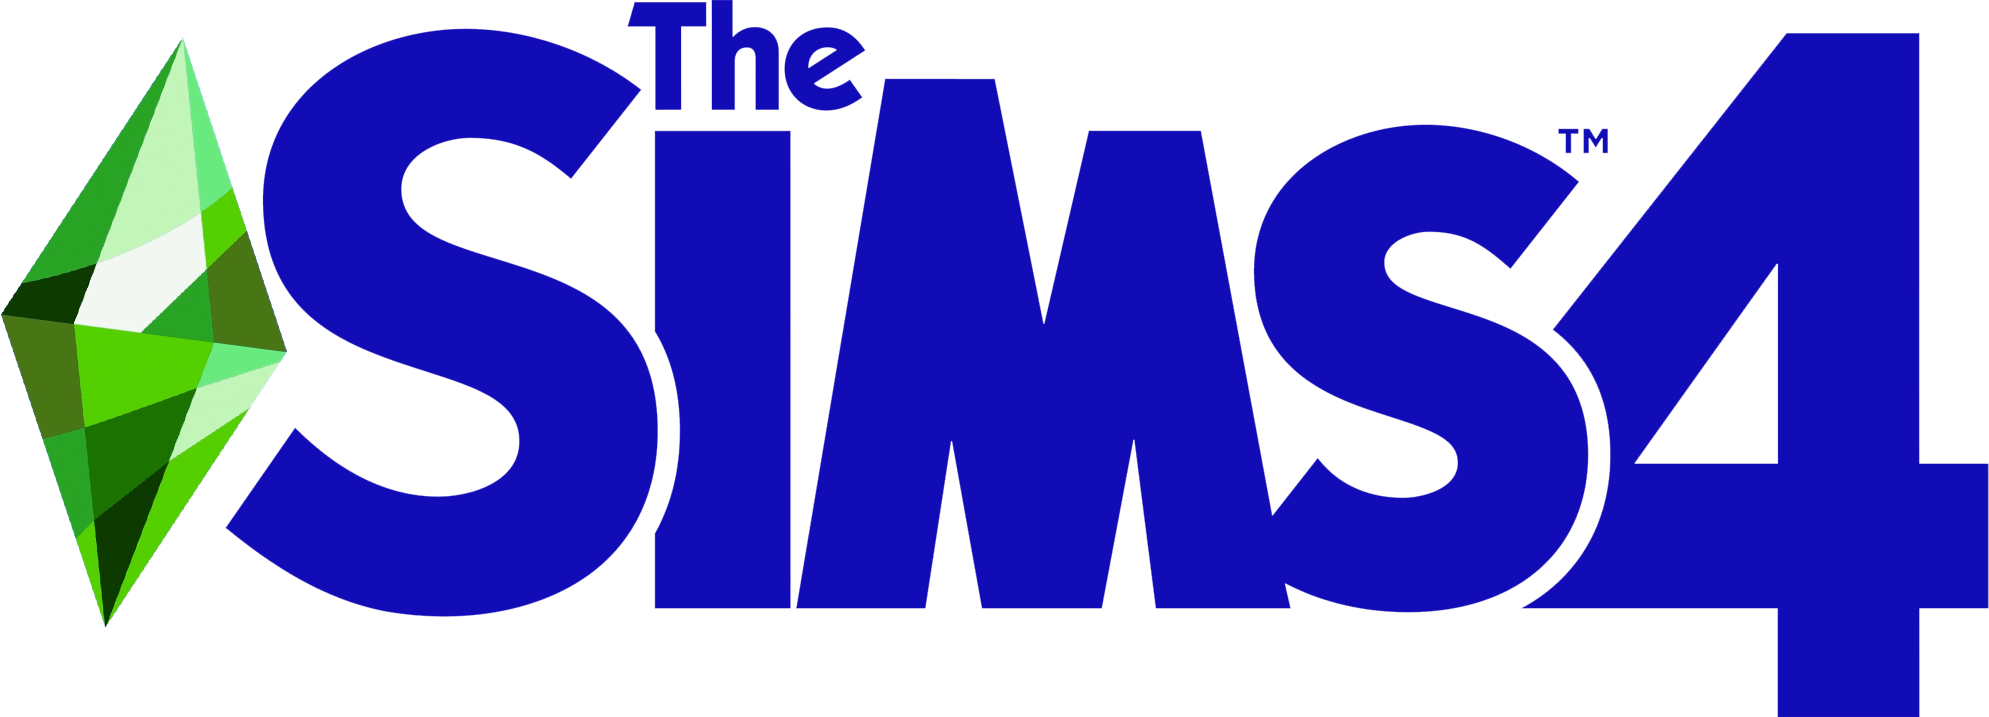 the sims 3 bin folder download